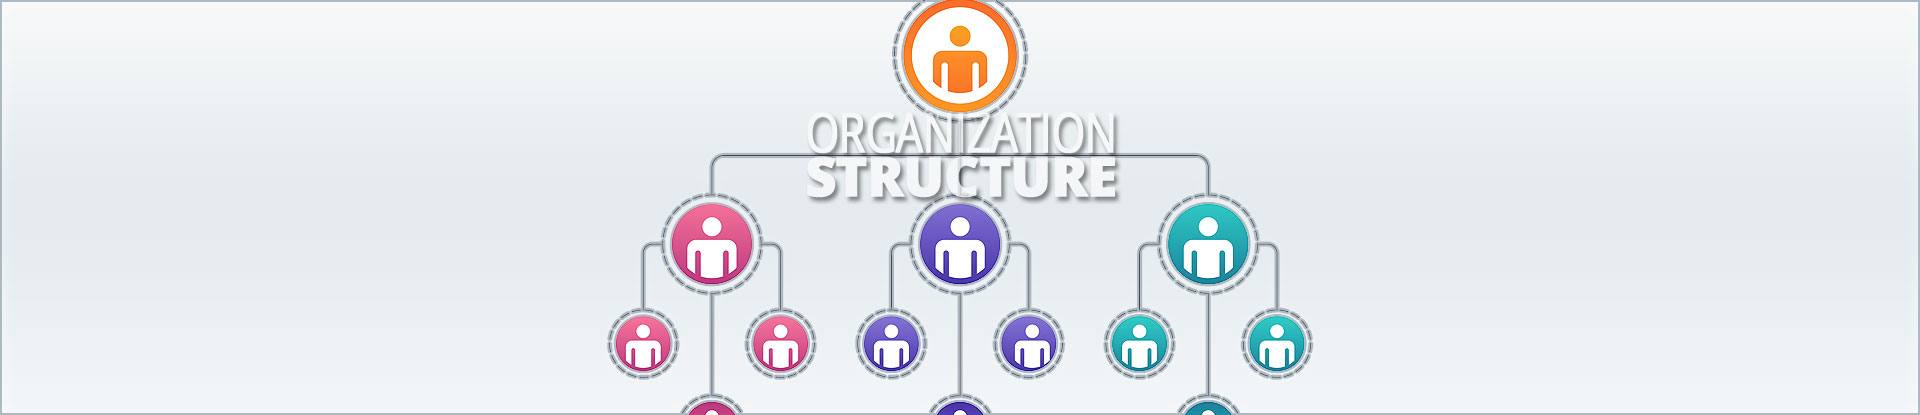 Organization Structure of Captain Polyplast Ltd.